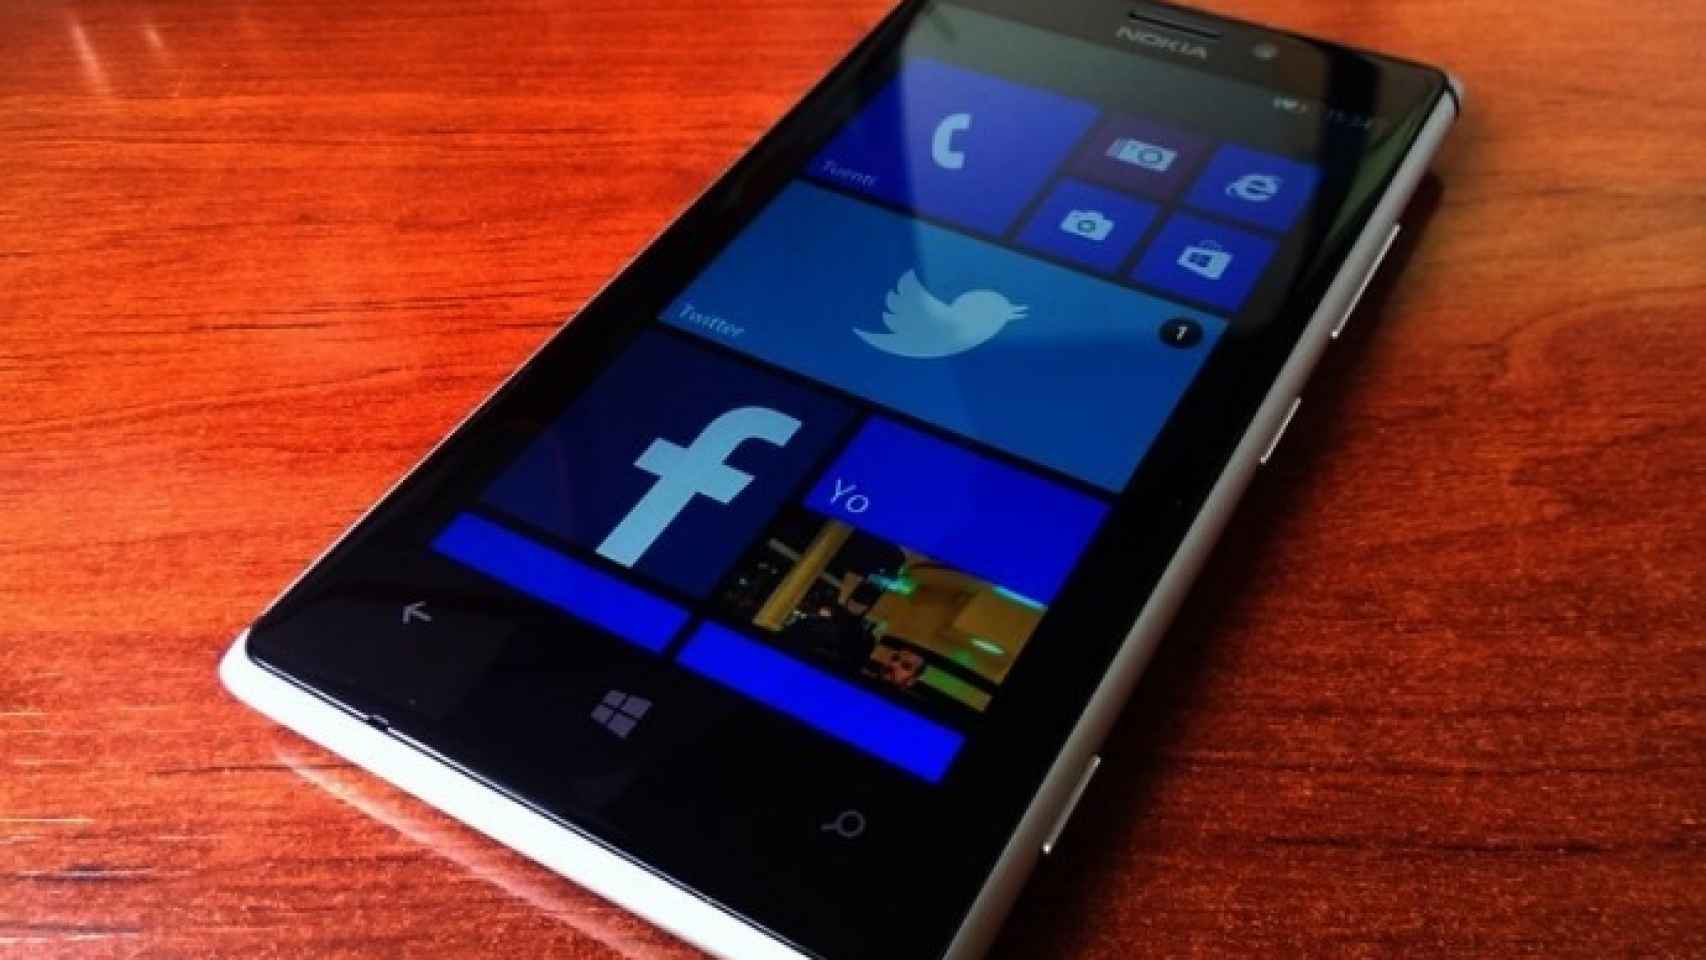 Nokia desarrolló un Android Lumia antes de que Microsoft llegase